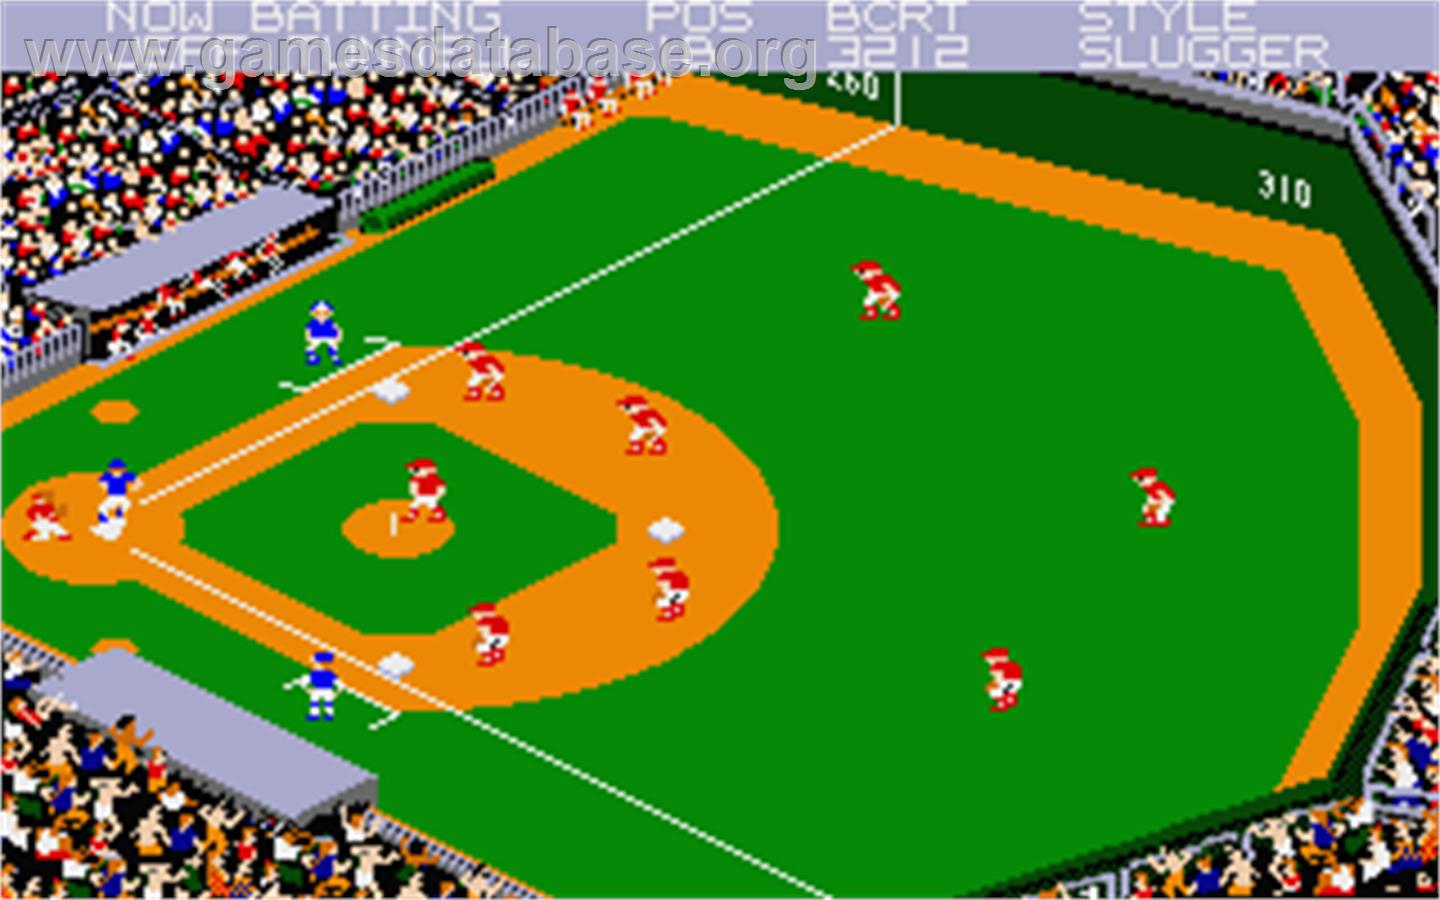 Championship Baseball - Atari ST - Artwork - In Game